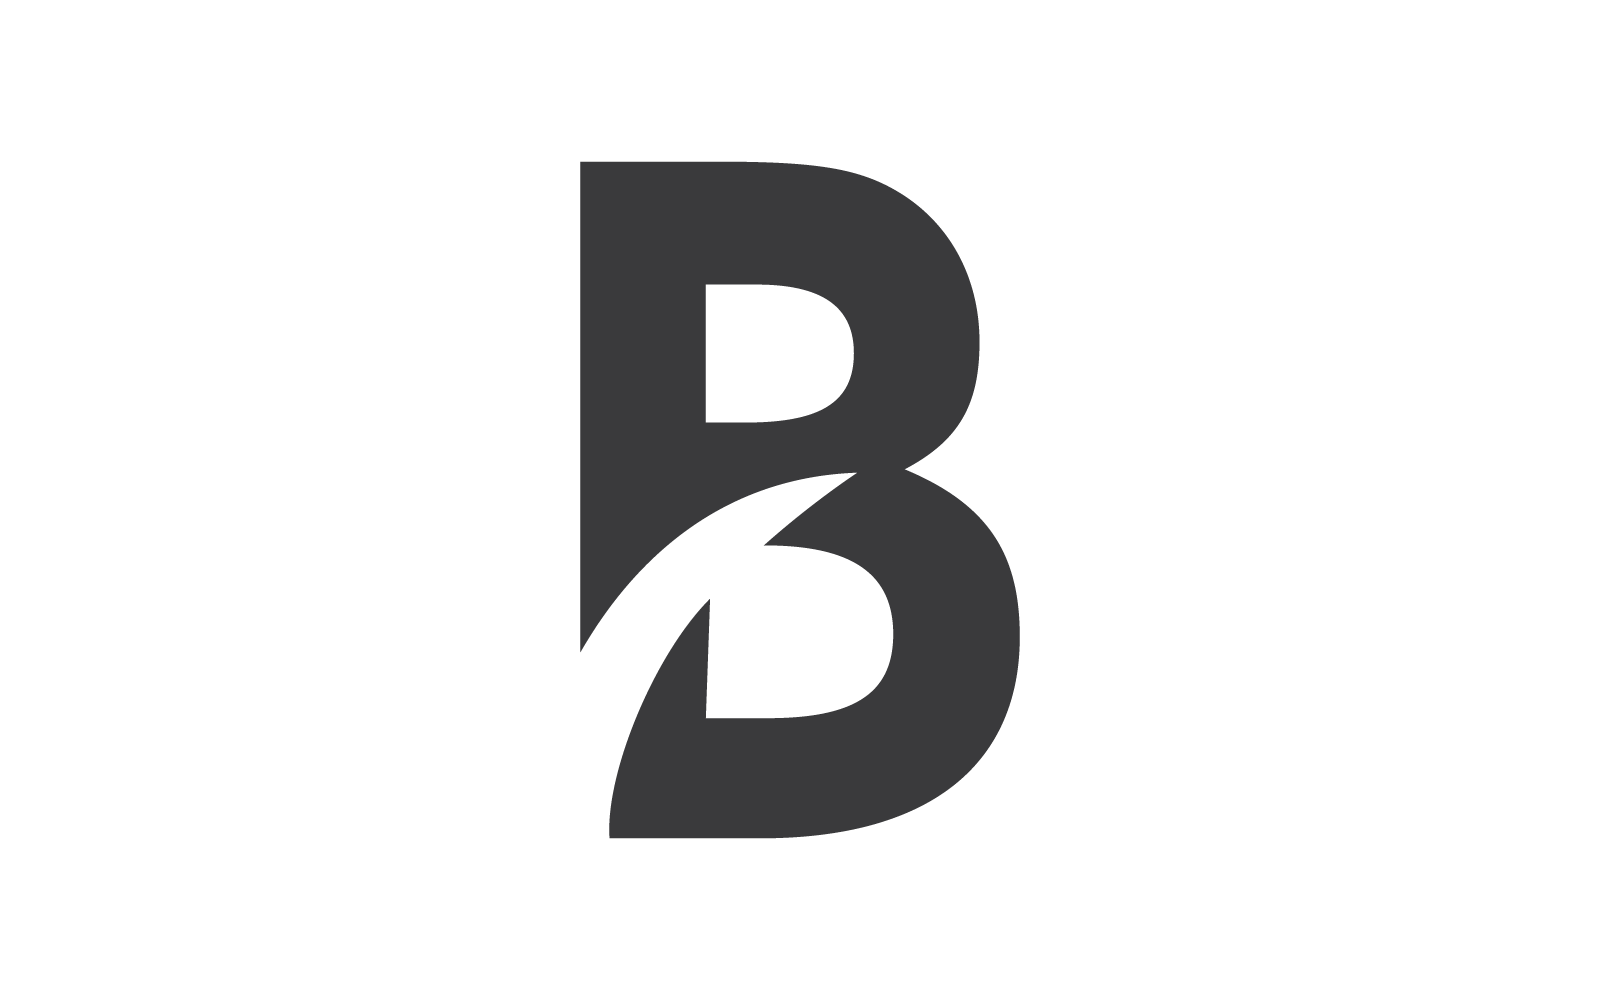 Modern B Initial, bokstav, alfabet teckensnitt logotyp vektor design